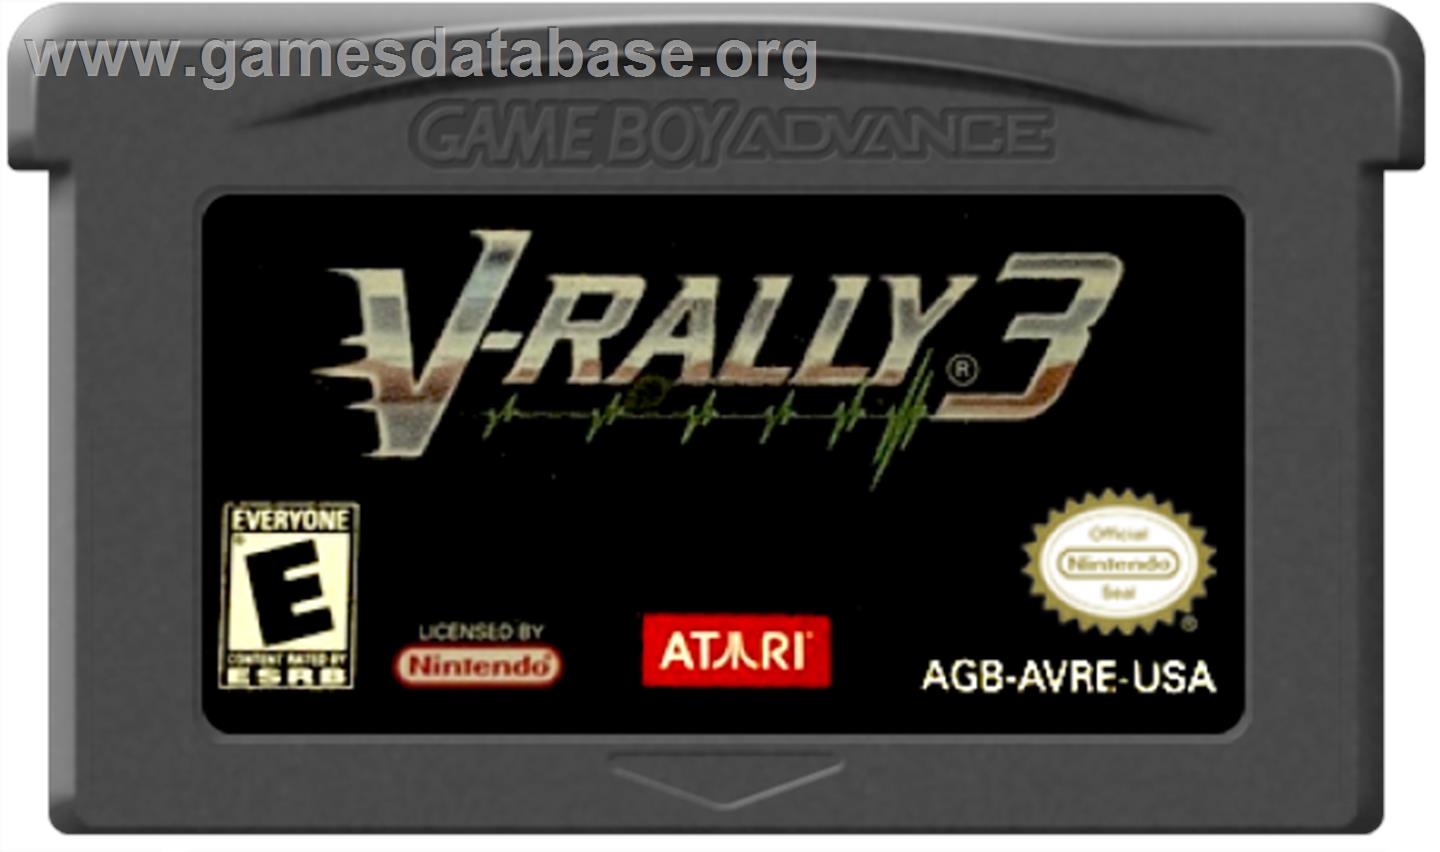 V-Rally 3 - Nintendo Game Boy Advance - Artwork - Cartridge